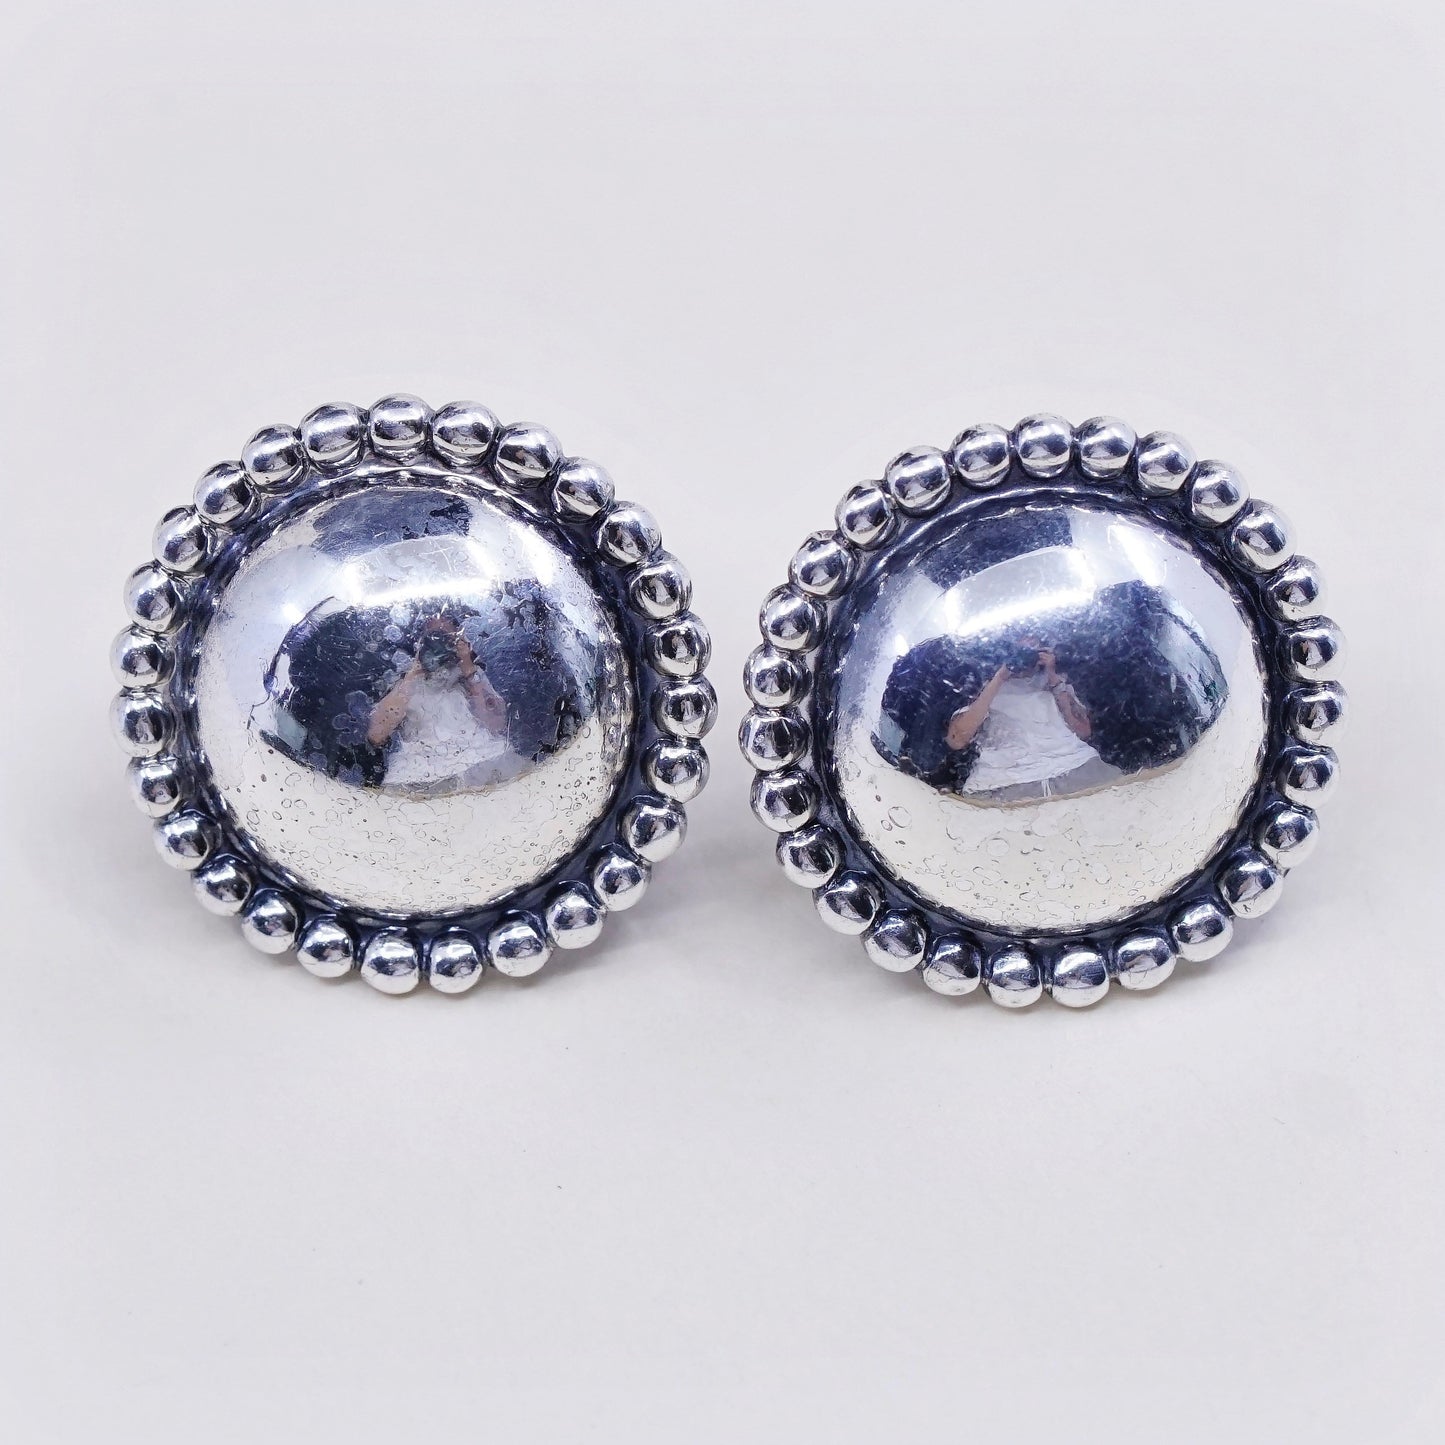 Vintage danecraft Sterling silver handmade earrings, 925 screw back w/ beads